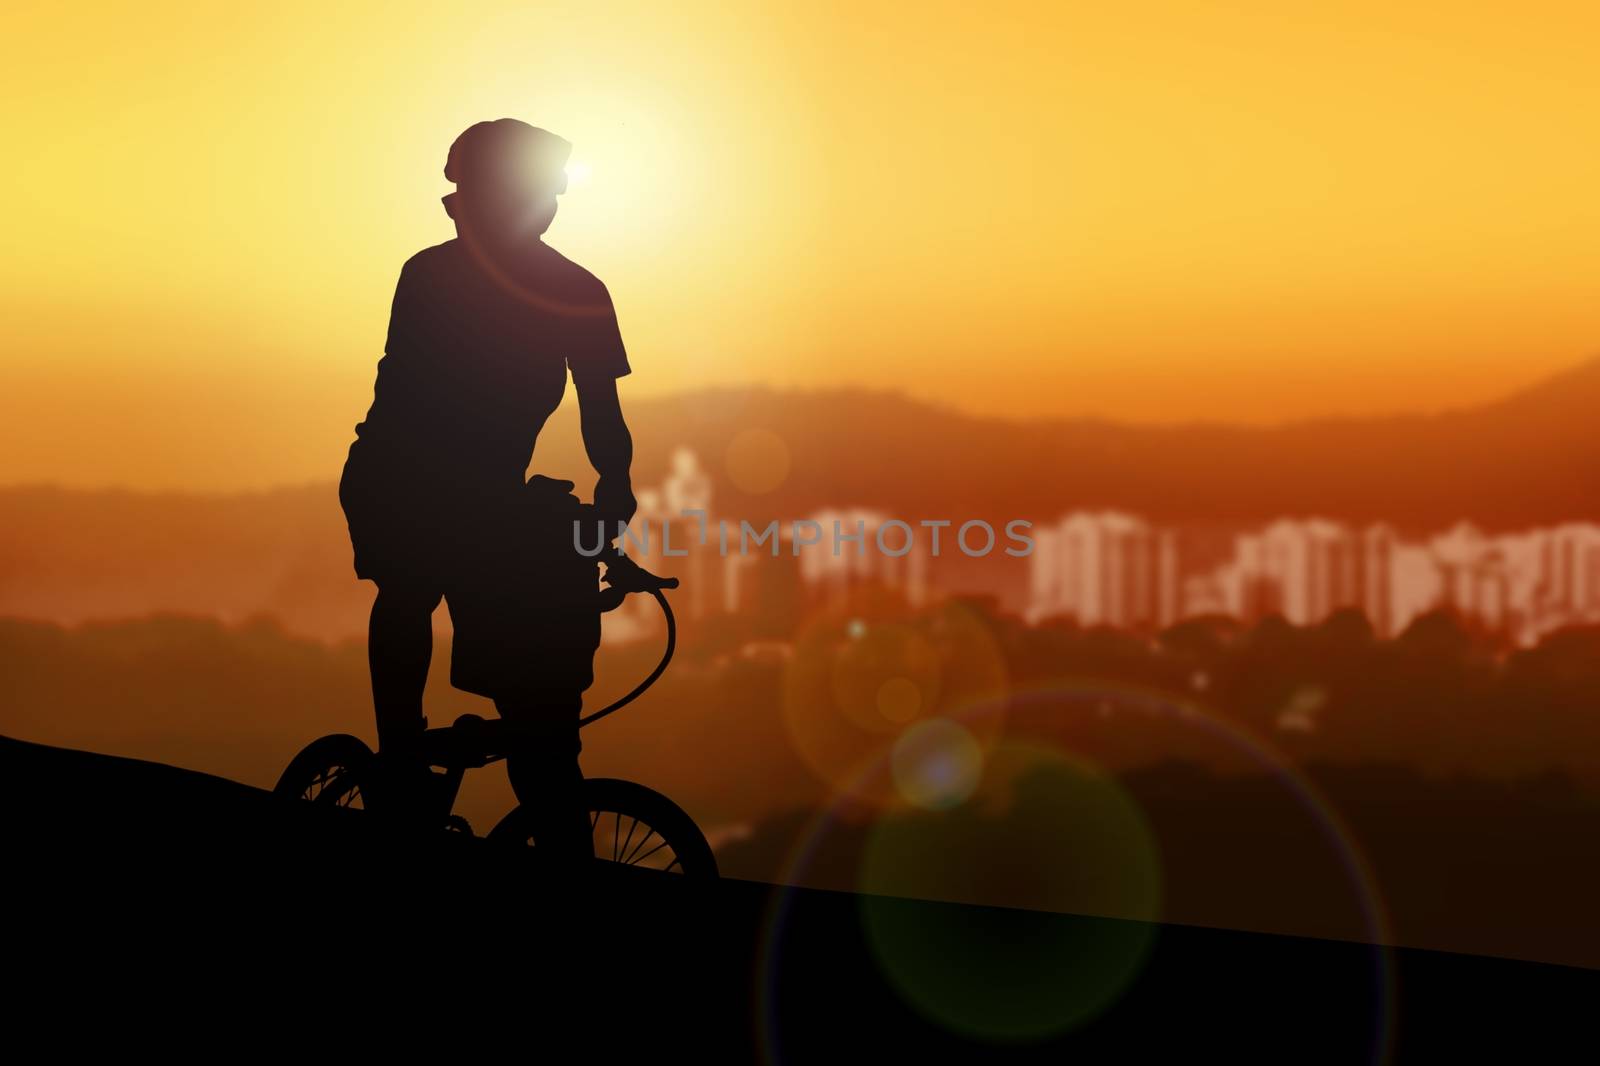 Mountain biker resting while watching sunset